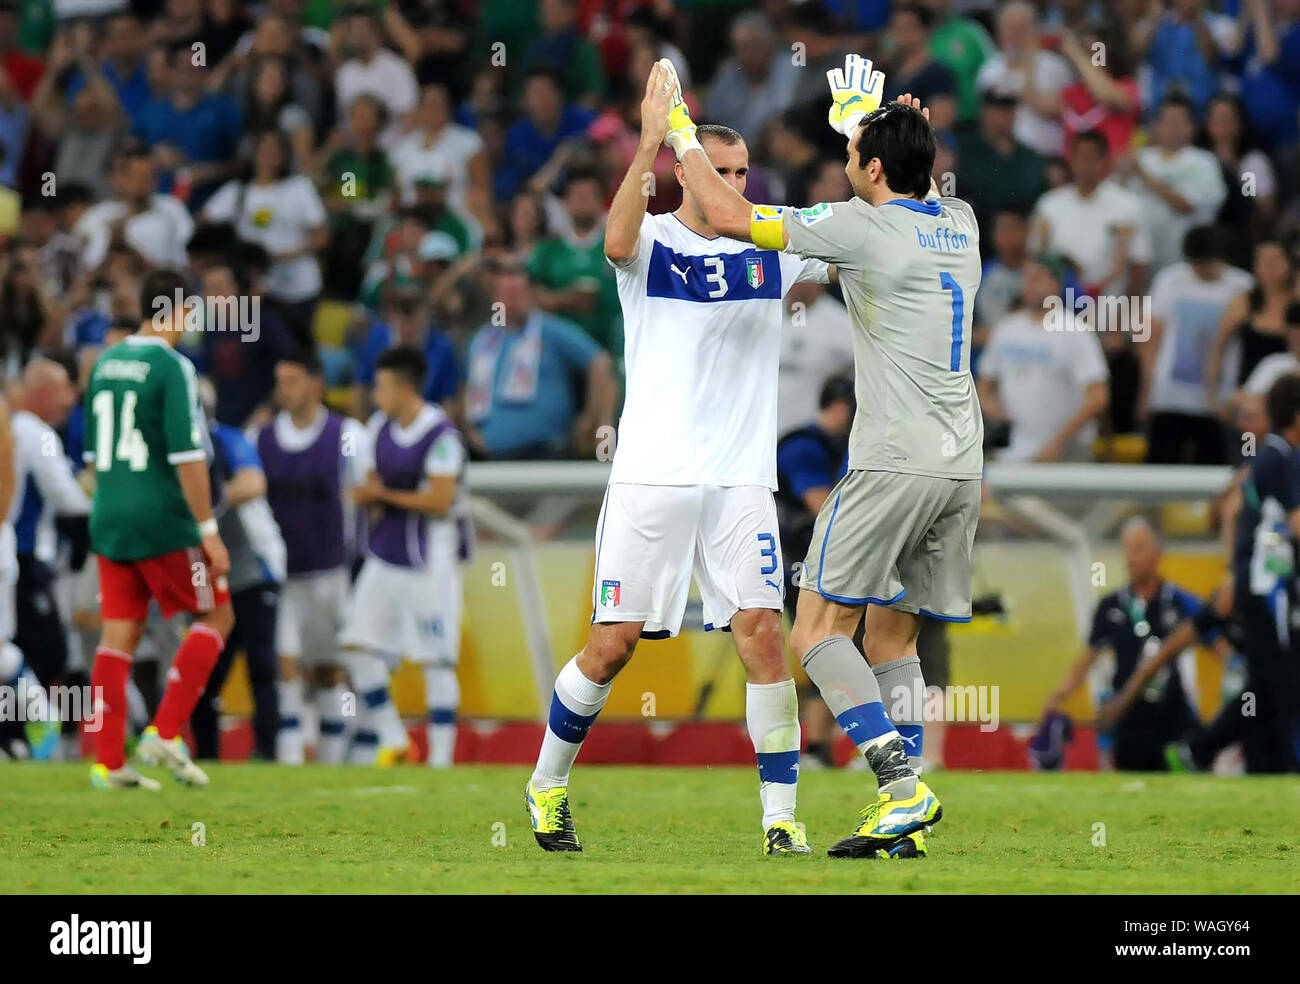 Rio de Janeiro, Brazil, June 16, 2013. Italy's Buffon soccer goalkeeper during the Mexico-Italy Confederations Cup match at Maracanã stadium. Stock Photo